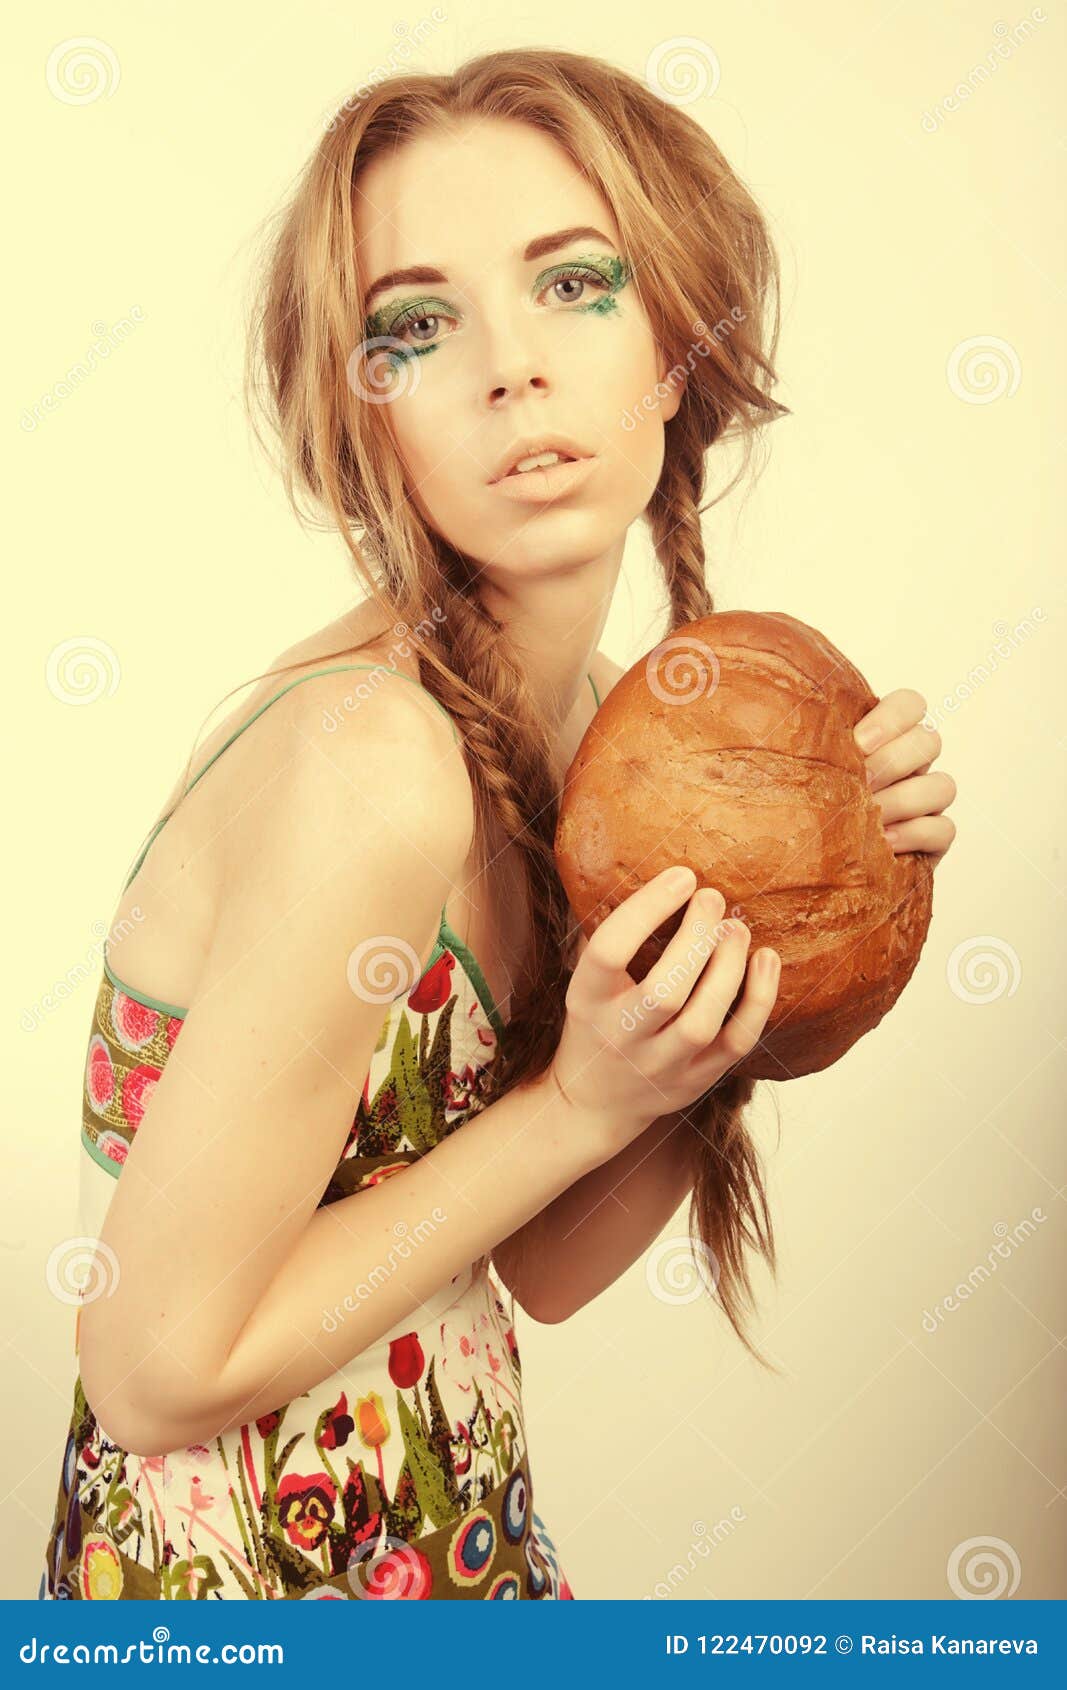 fashion-model-posing-bread-122470092.jpg